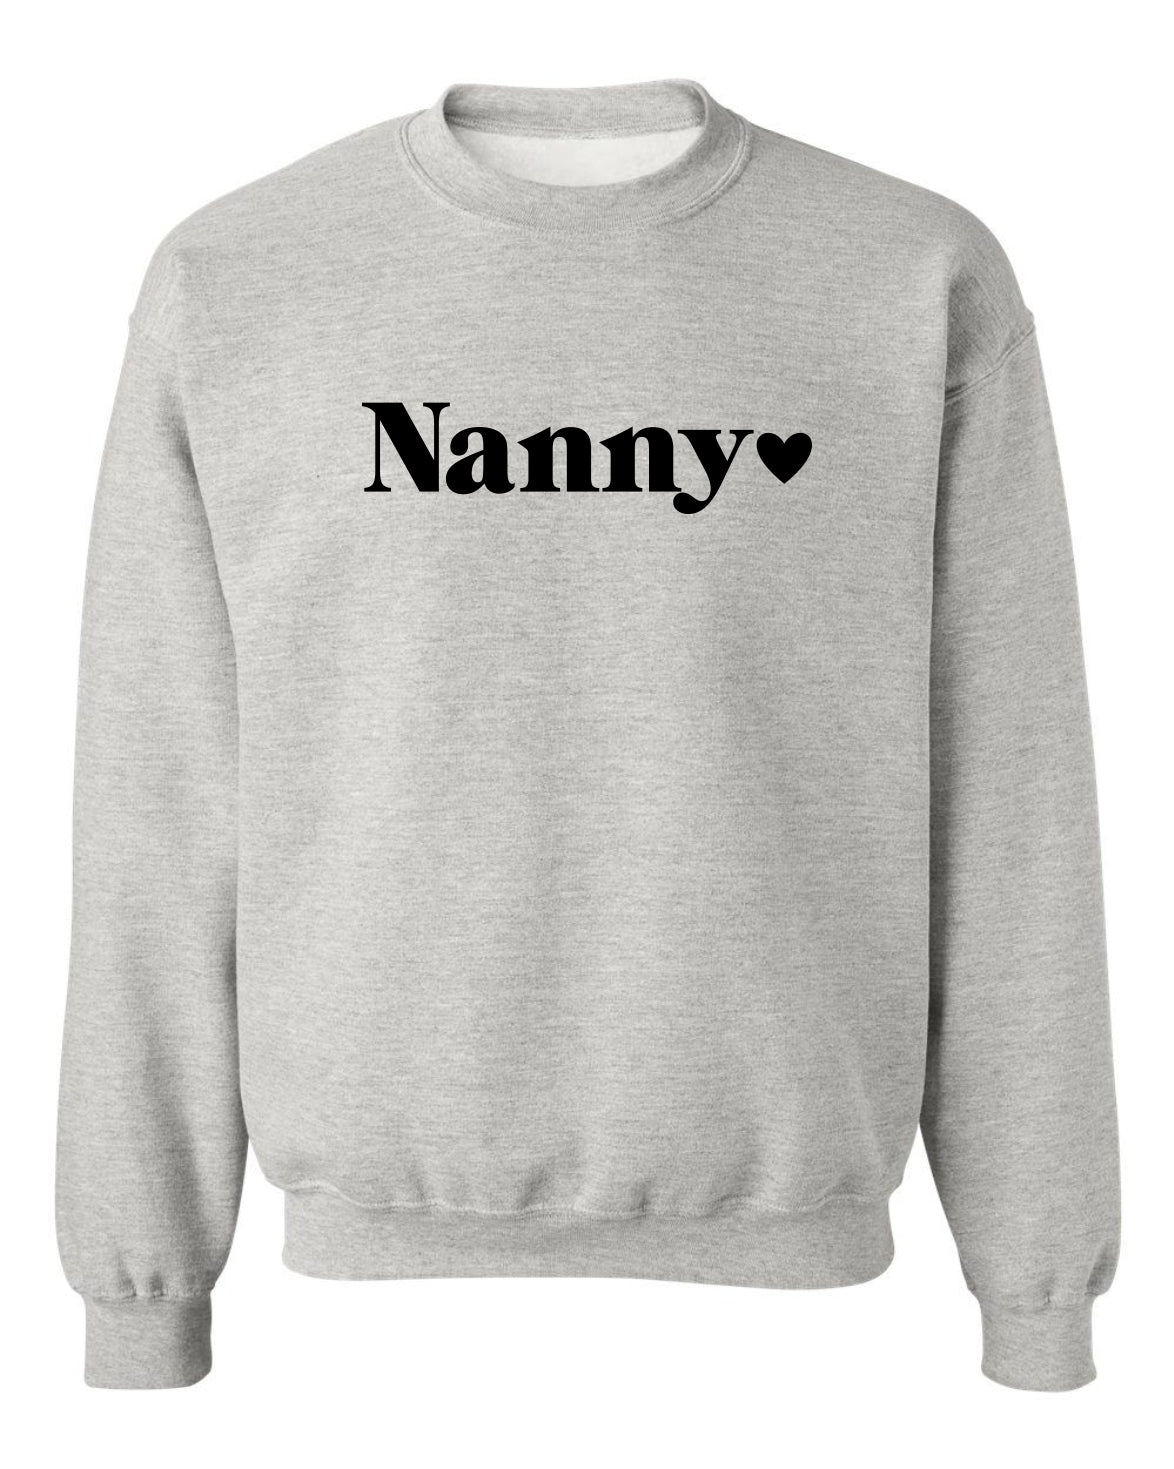 "Nanny" Heart Unisex Crewneck Sweatshirt